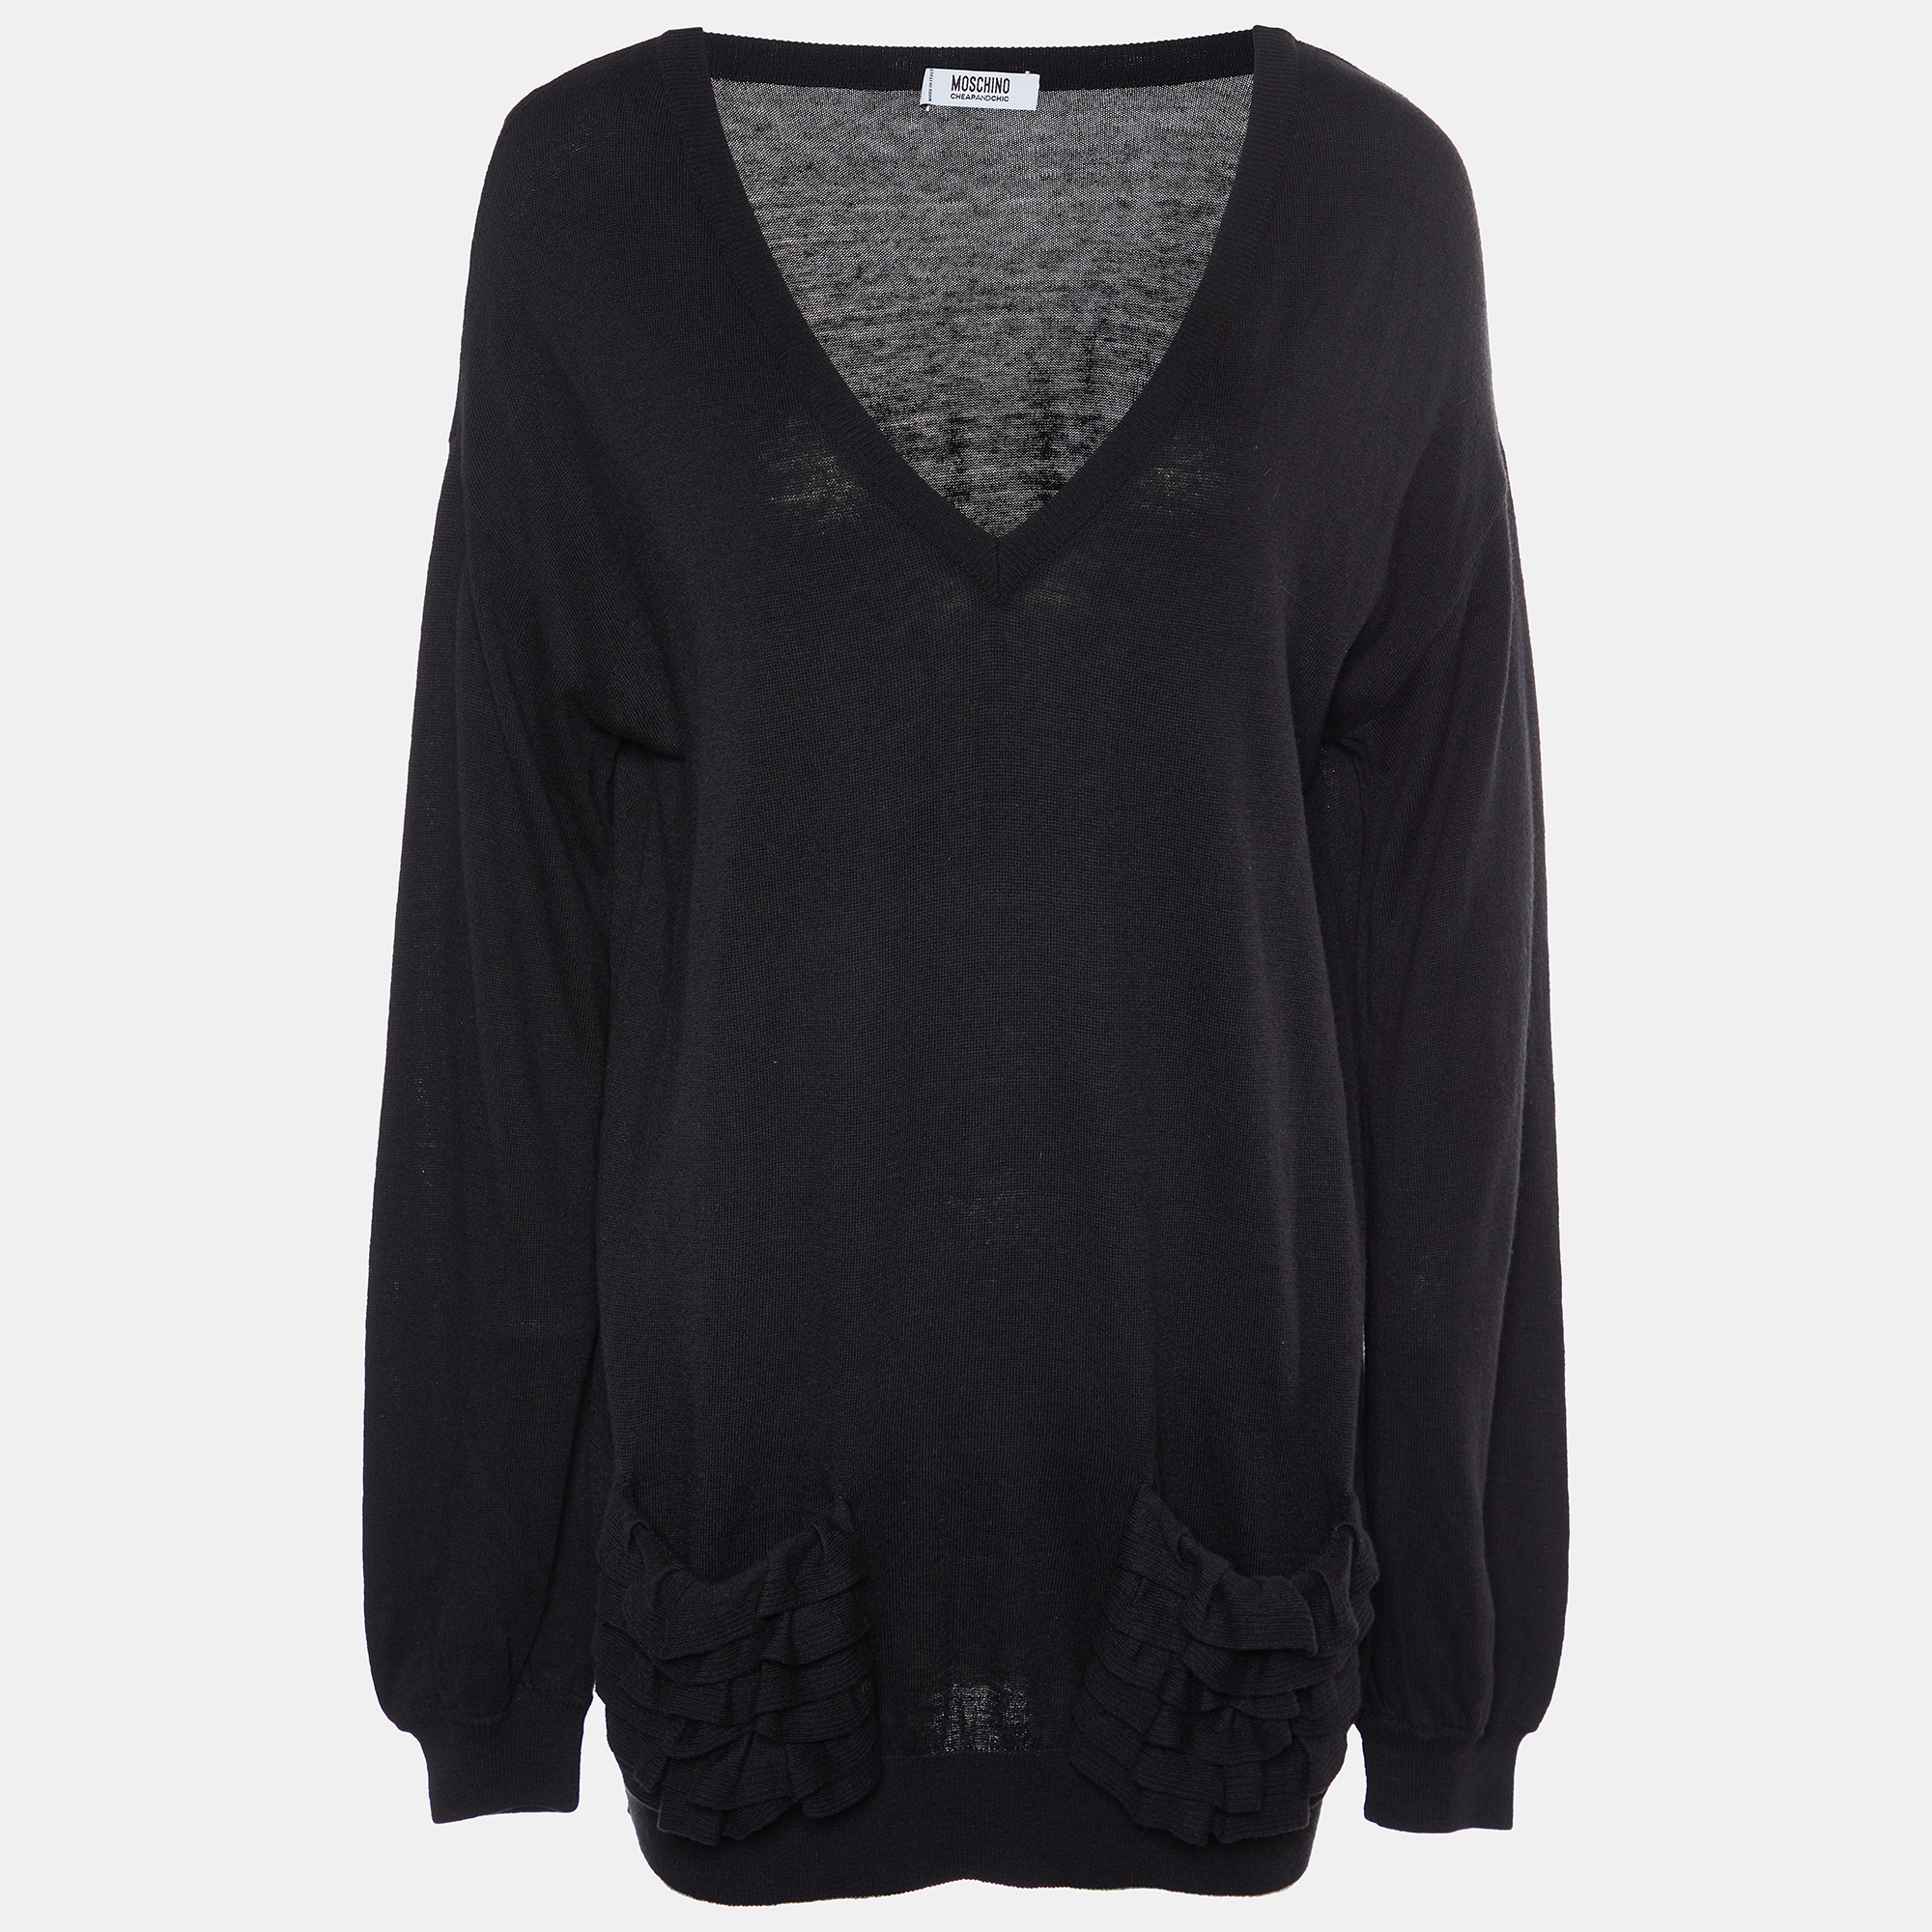 

Moschino Cheap and Chic Black Knit Ruffle Pocket Sweater L